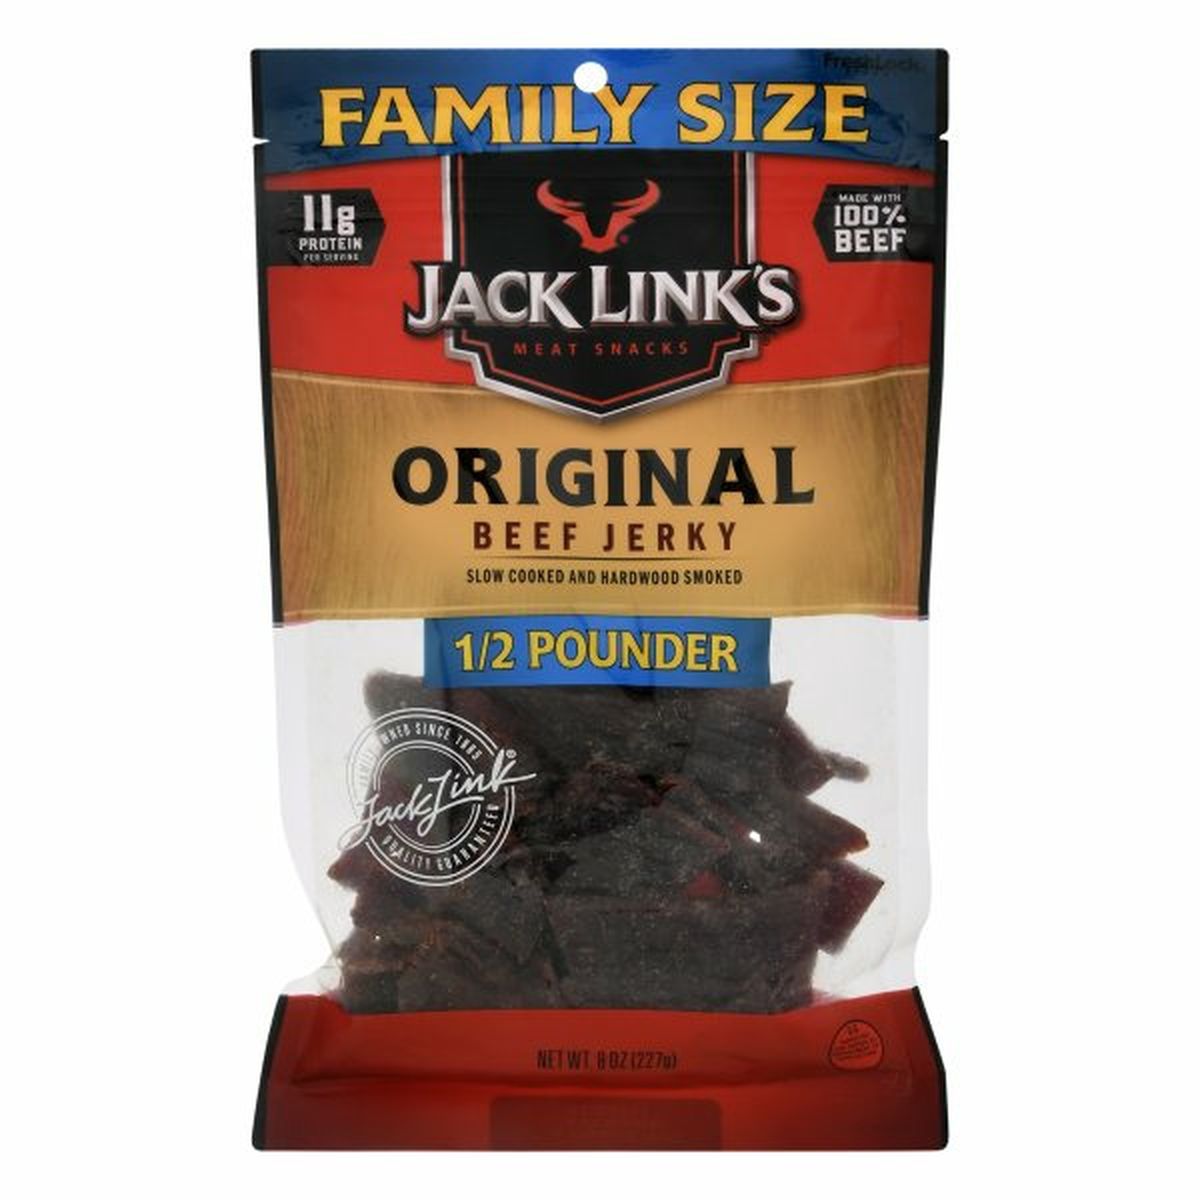 Calories in Jack Link's Beef Jerky, Original, Family Size